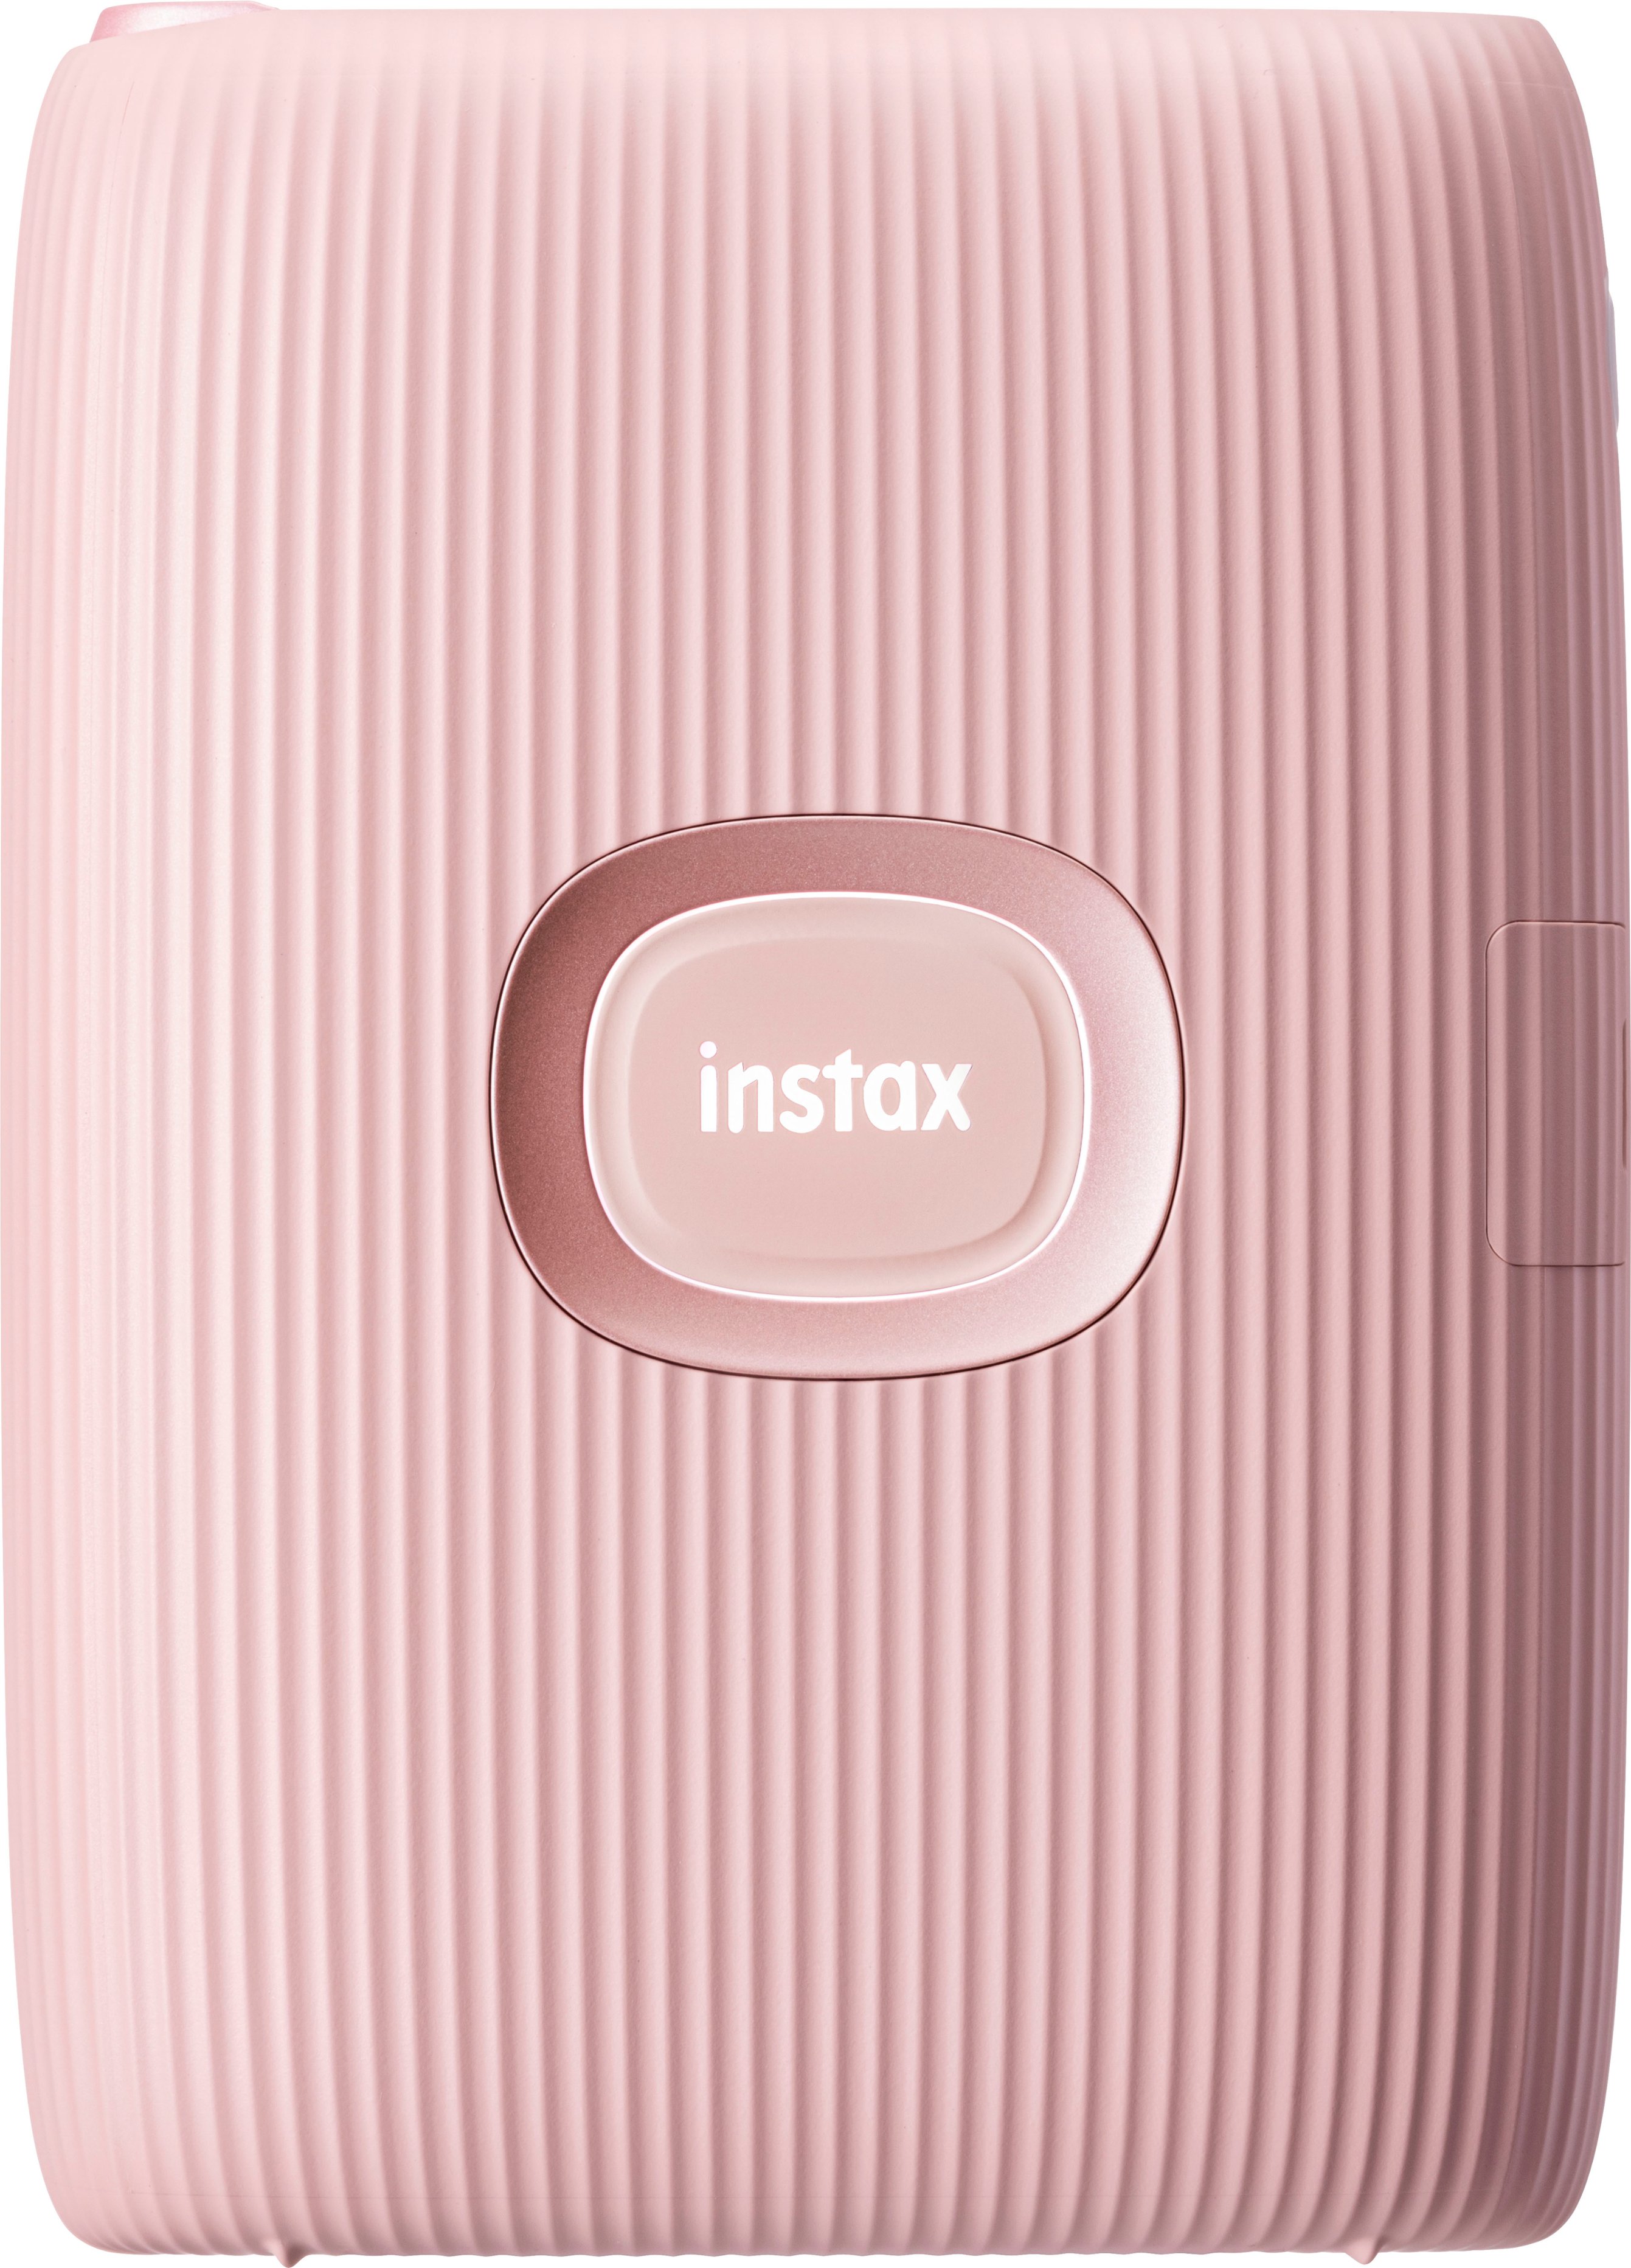 Instax Link 2 Wireless Printer Pink 16767208 - Best Buy